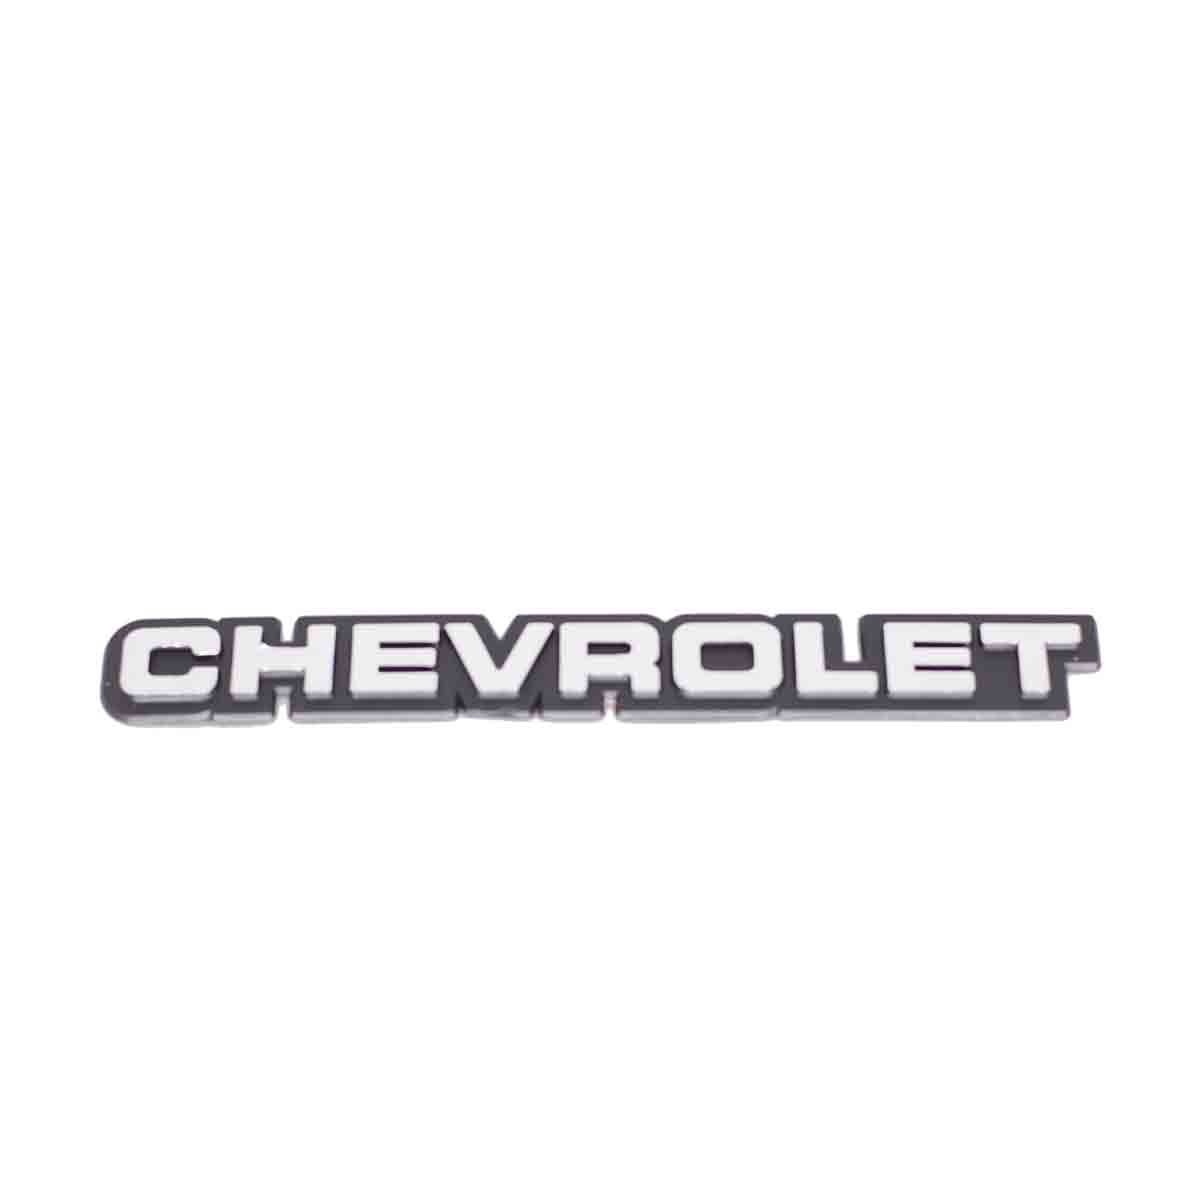 Emblema Chevrolet Brilhante(Chevette)